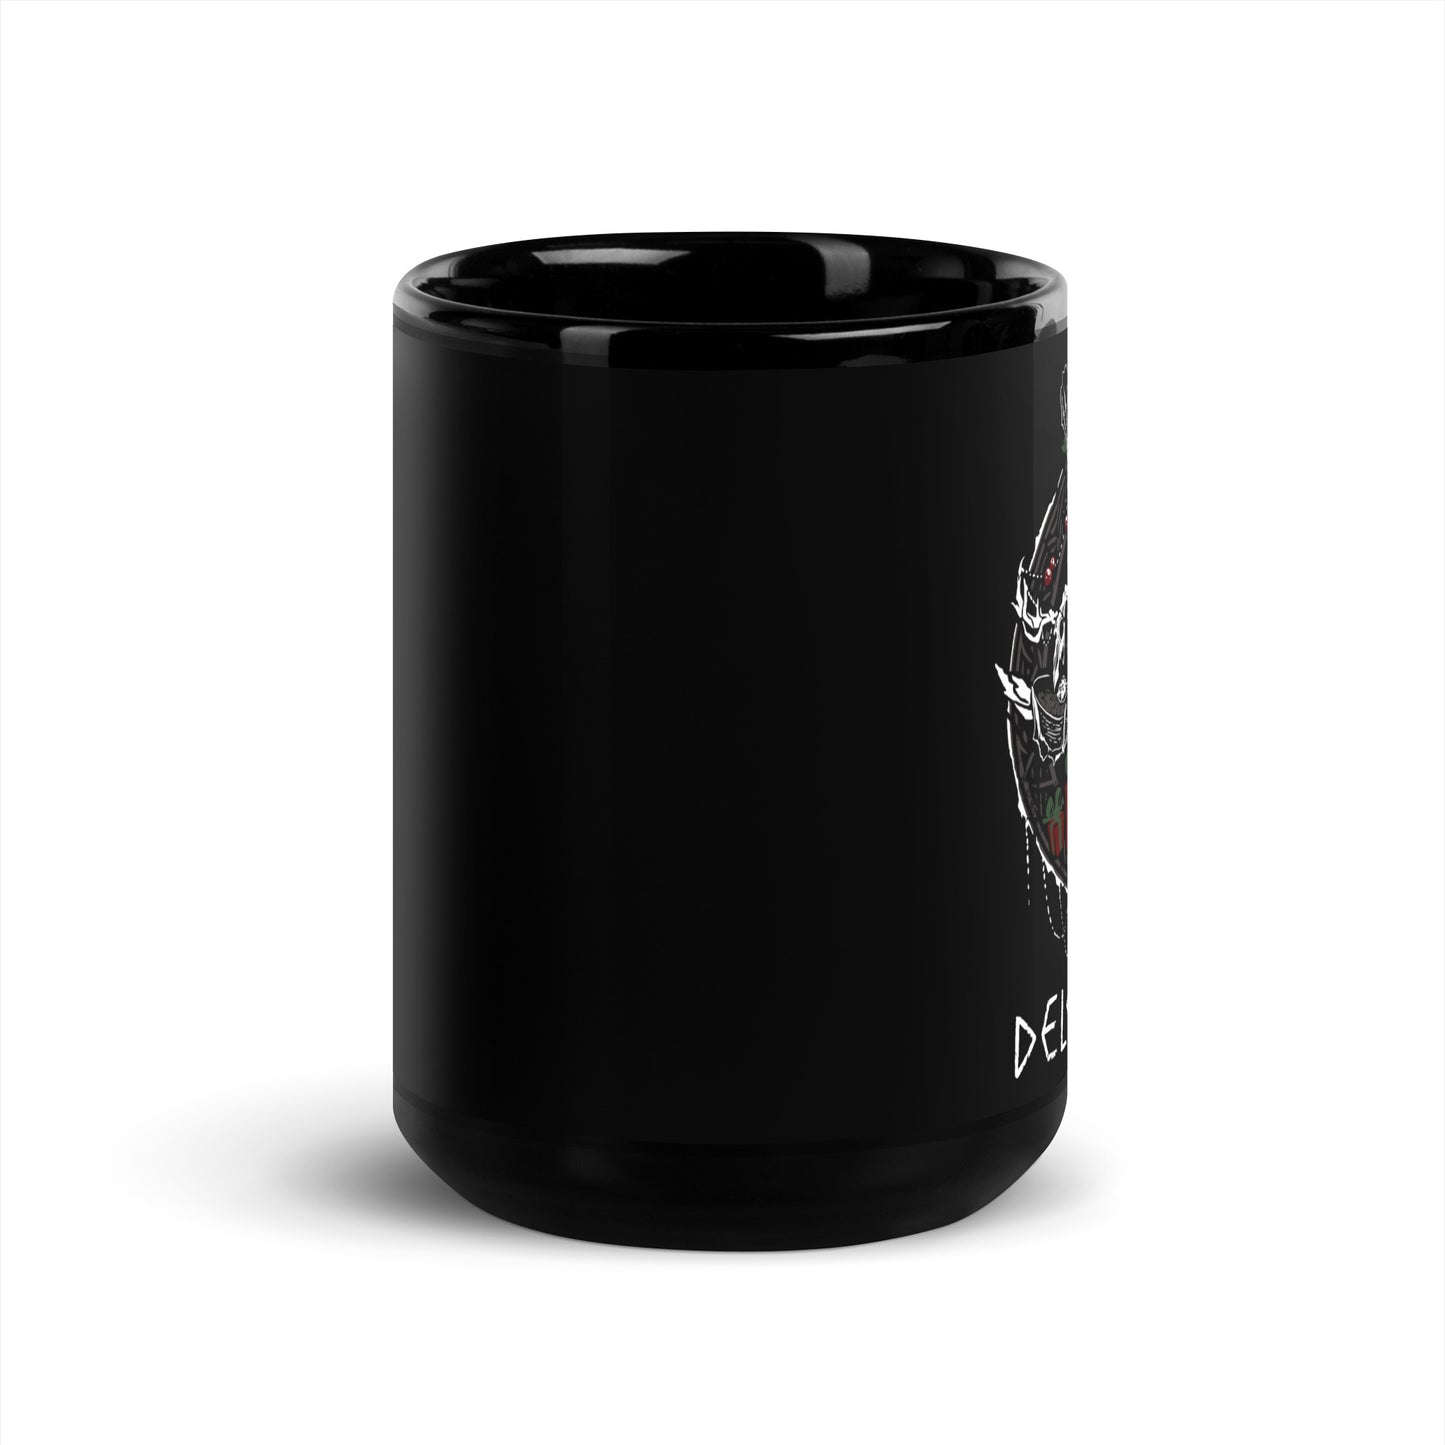 Deloraine Yule Black Glossy Mug